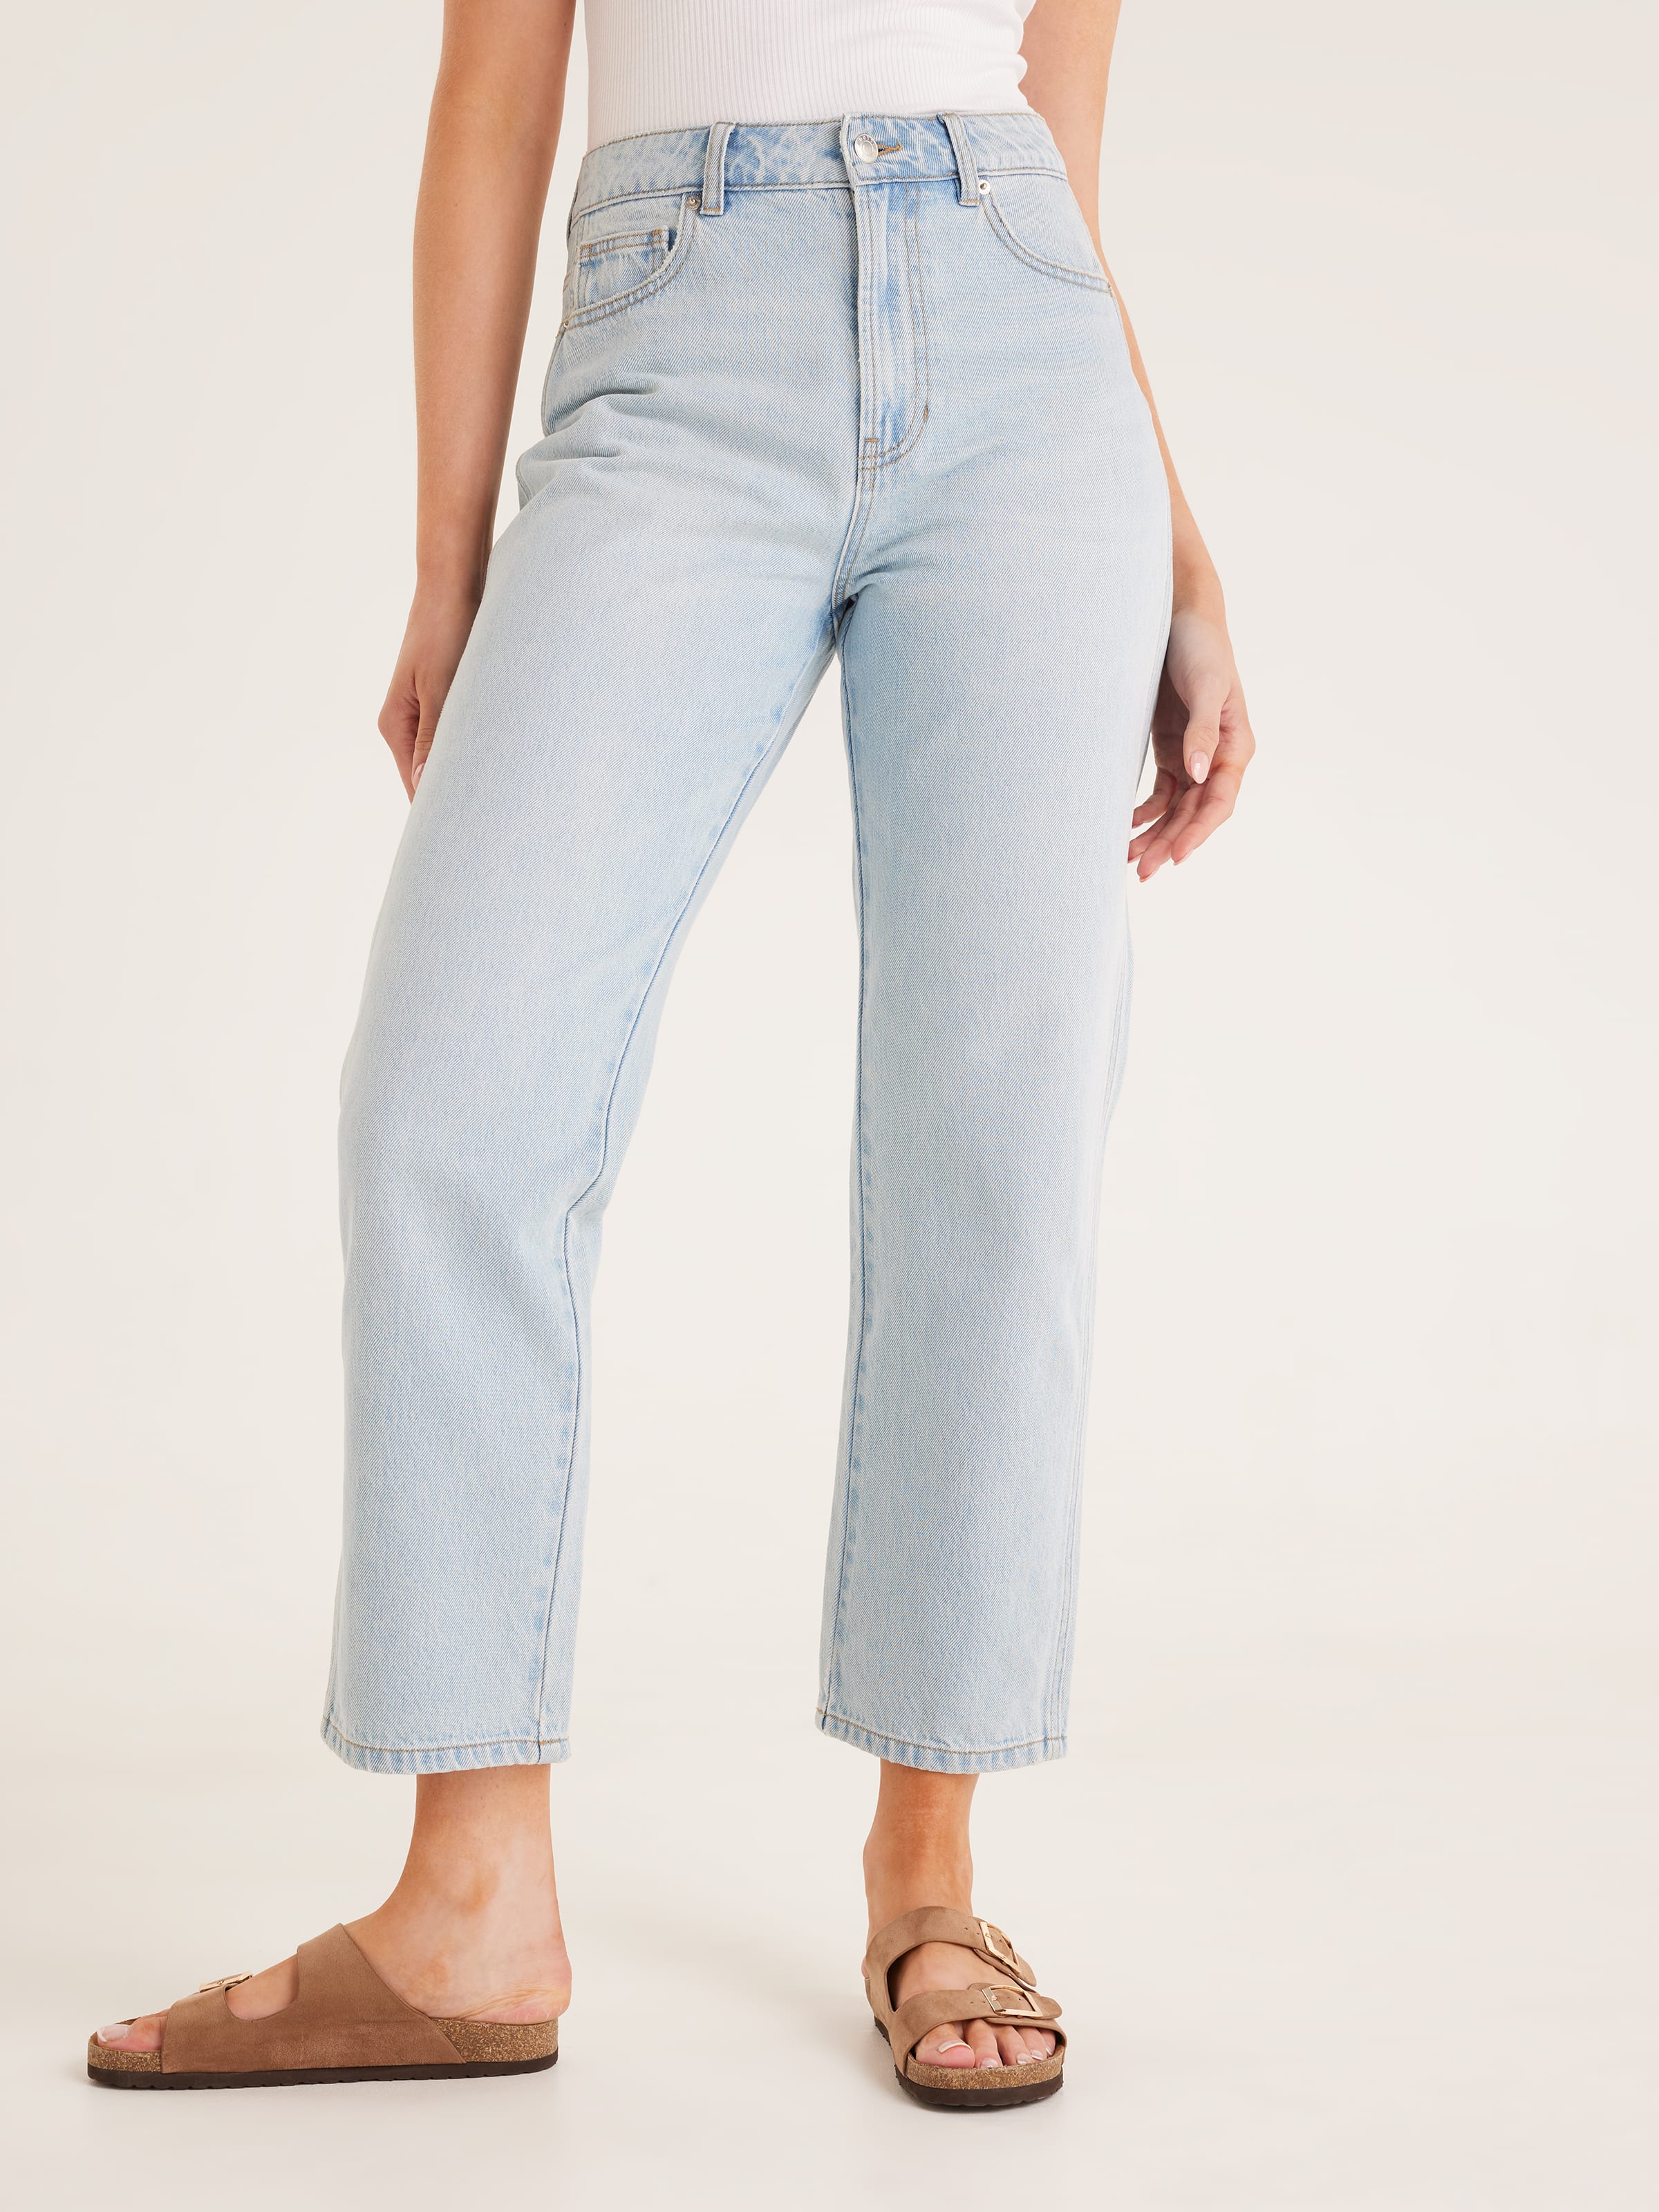 Jeans For Women - Denim Pants, Skinny Jeans & More